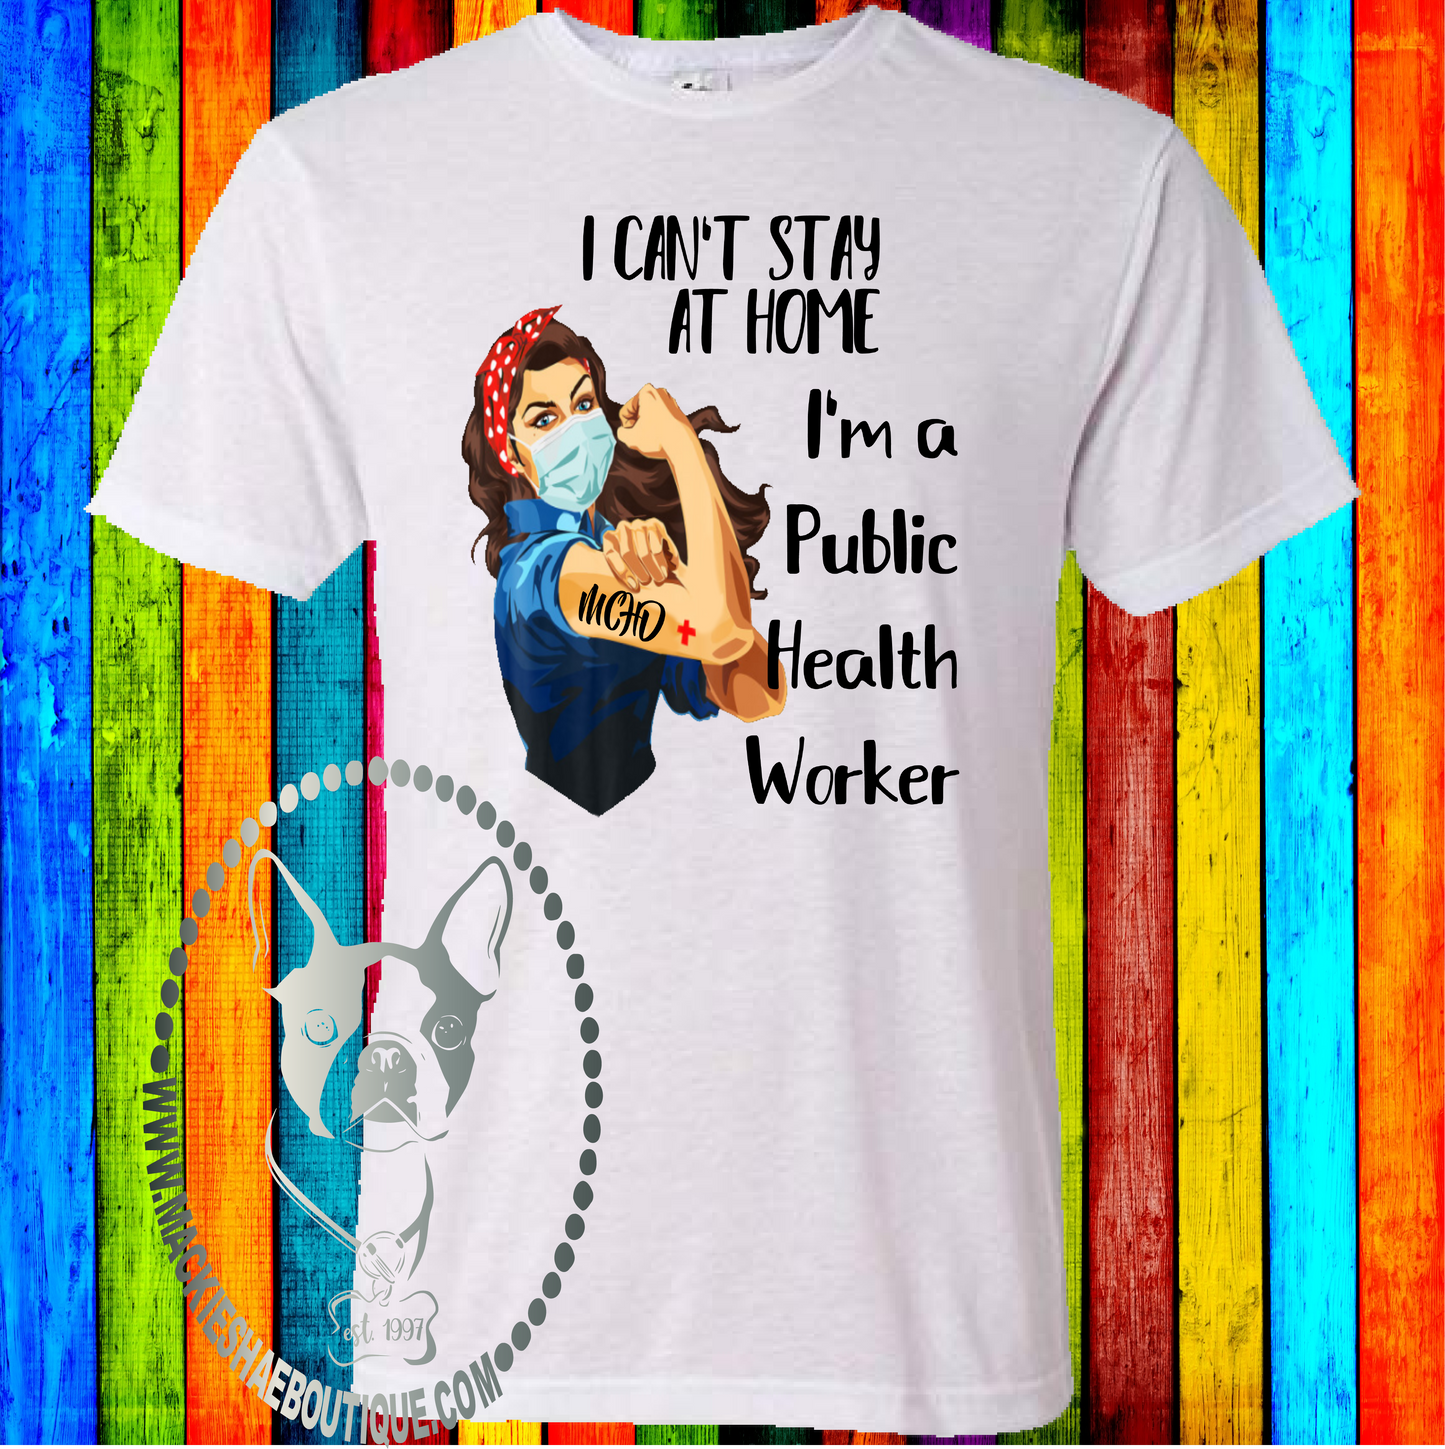 I Can't Stay Home I'm A Public Health Worker Custom Shirt, Short Sleeve